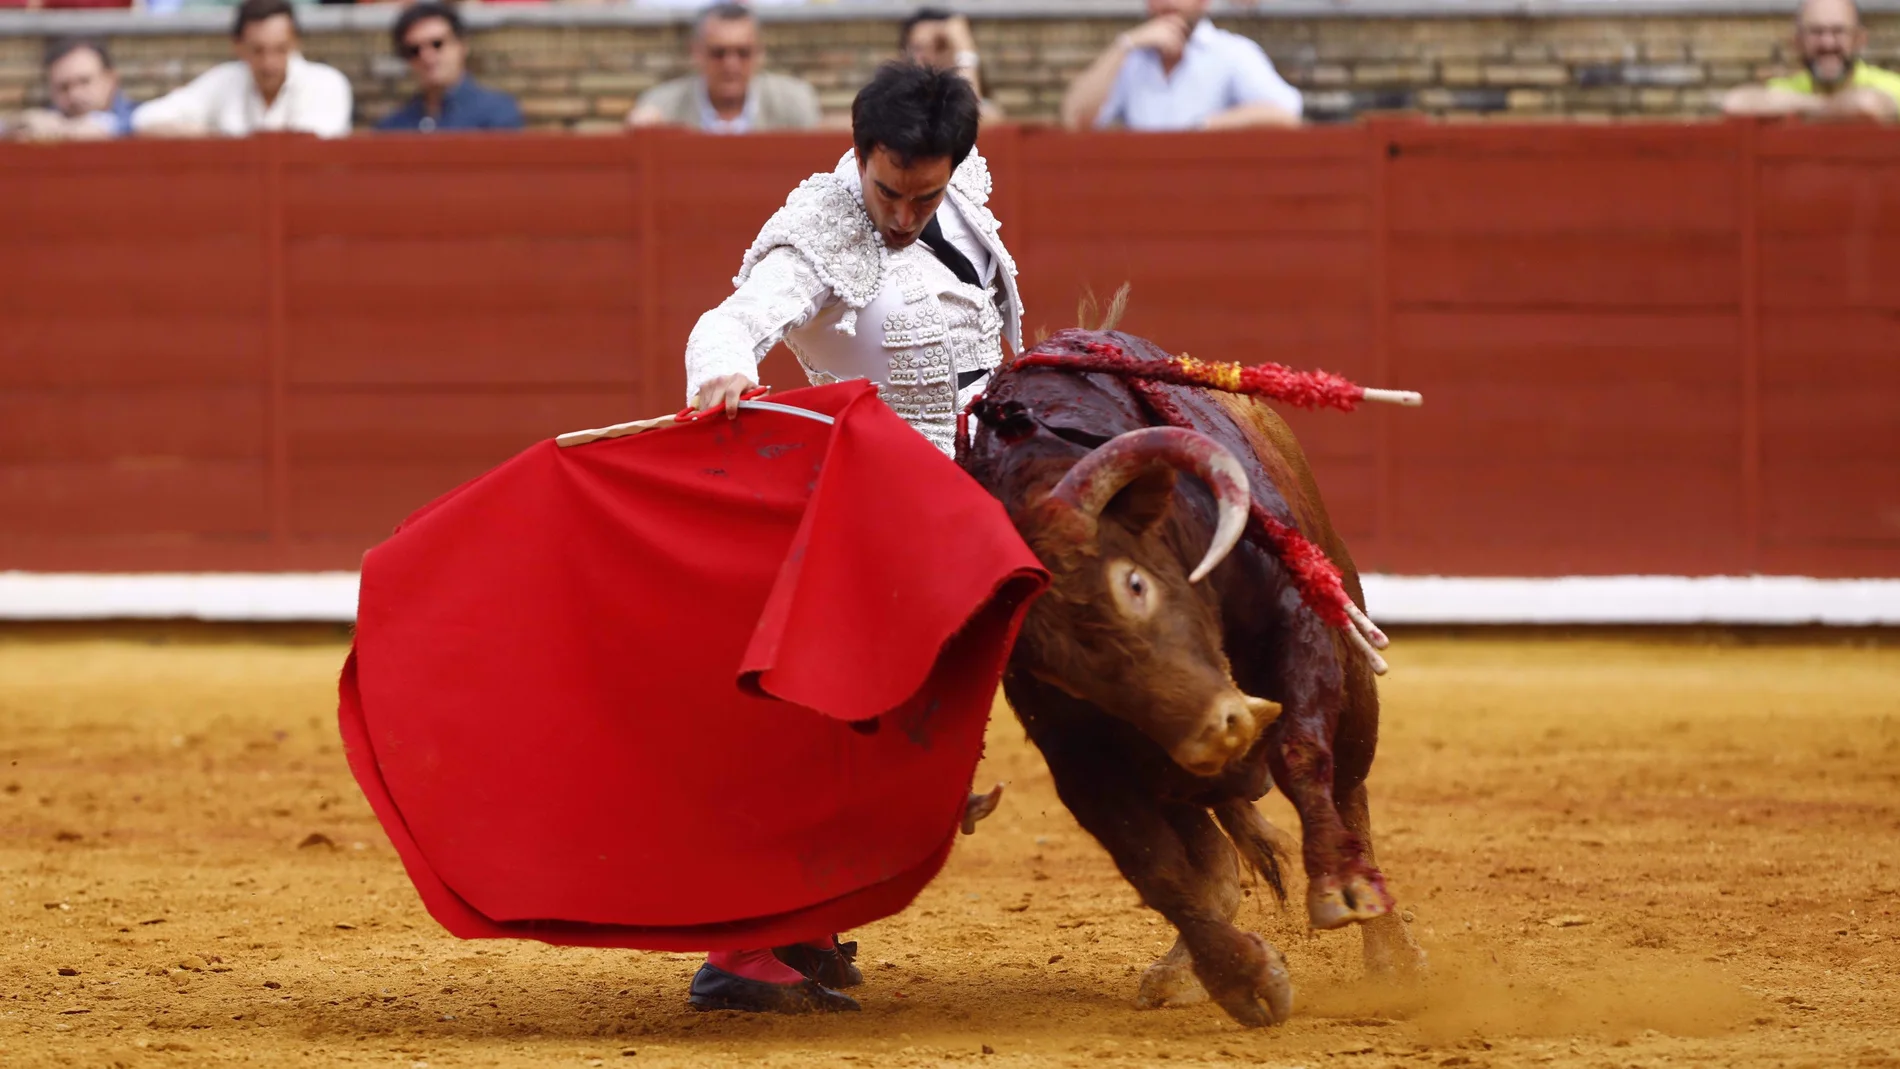 CÓRDOBA, 21/05/2022.- El diestro Lagartijo durante su faena en la corrida de toros de la Feria de Córdoba este sábado. EFE/ Salas